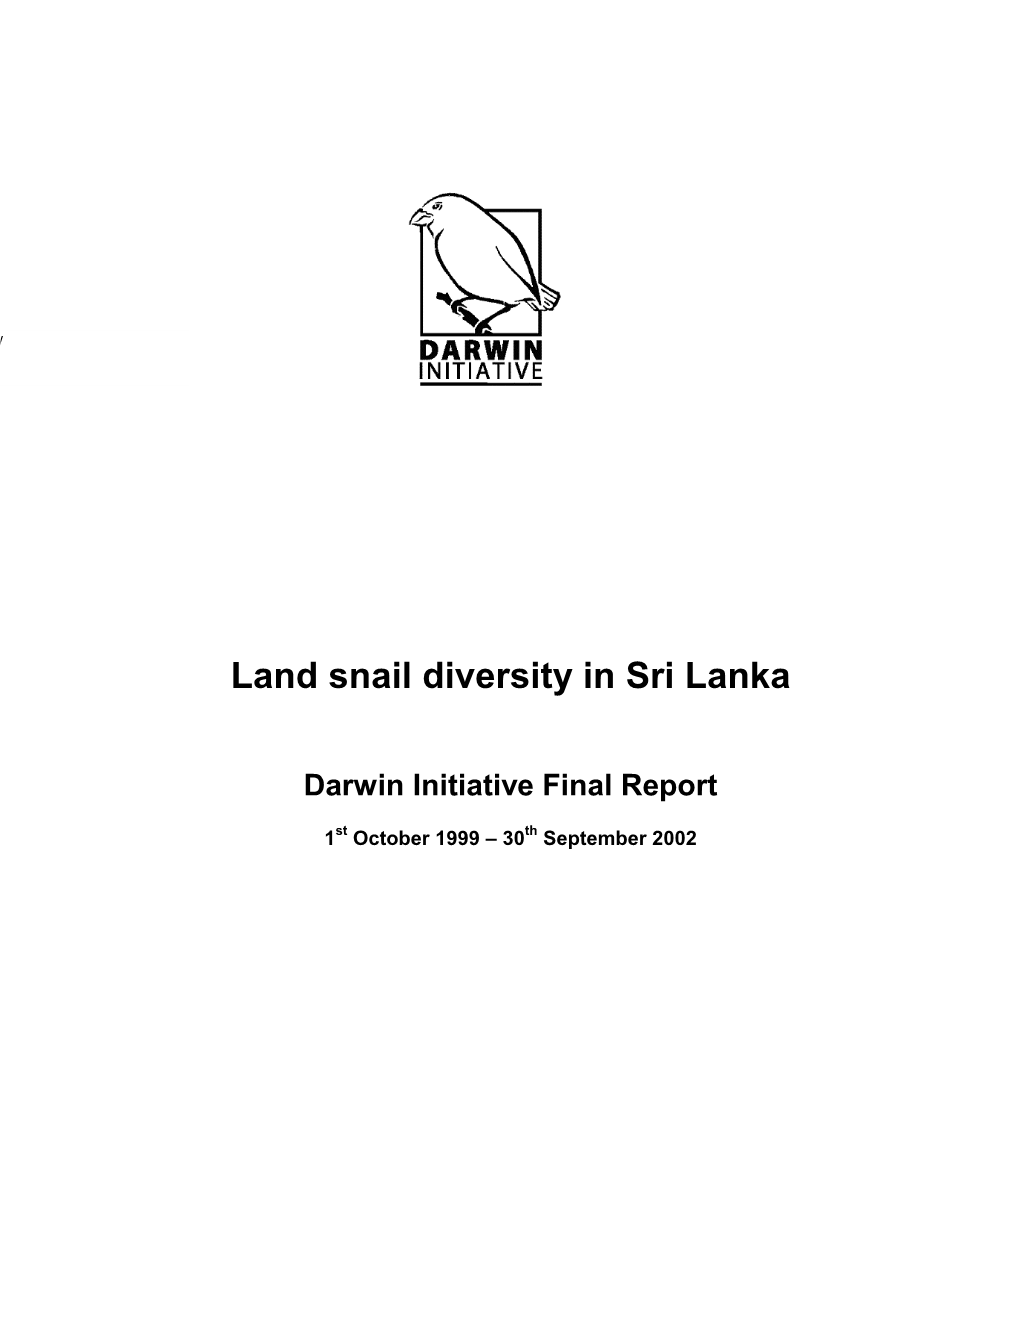 Land Snail Diversity in Sri Lanka